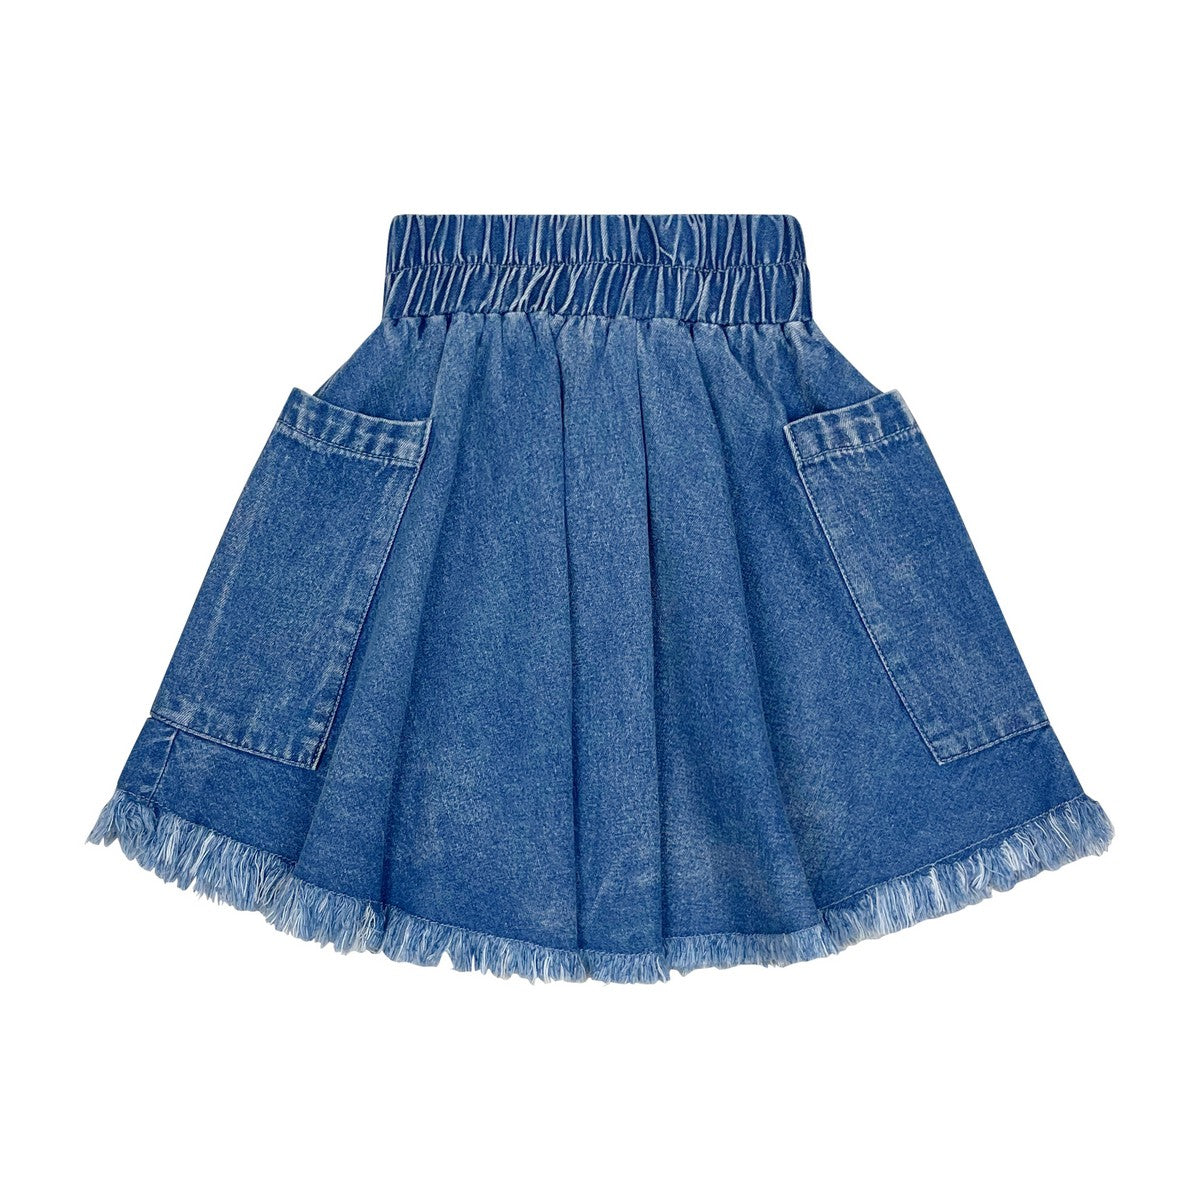 Midwash Denim Pocket Skirt